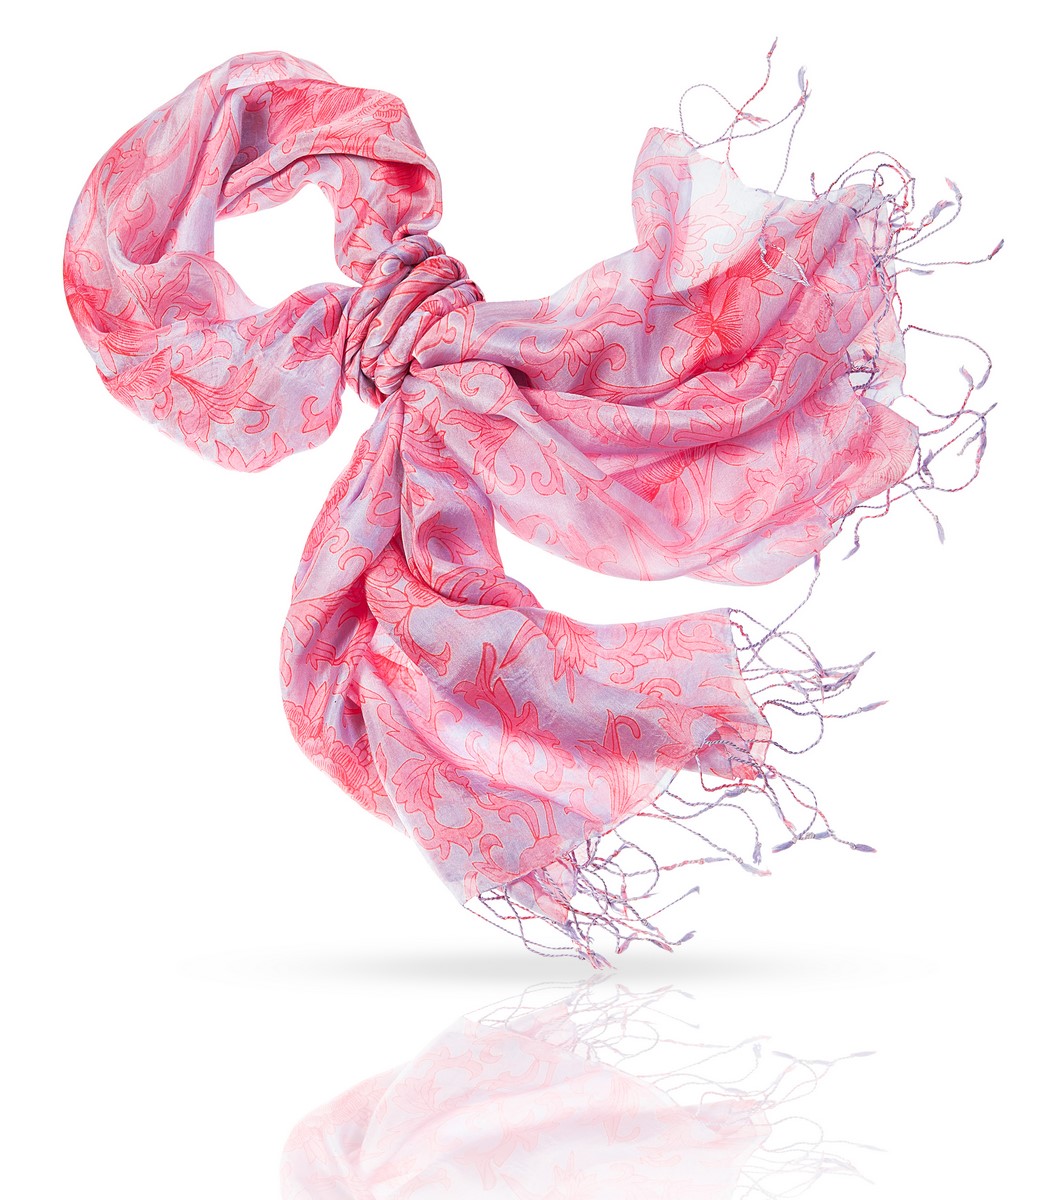 Палантин Michel Katana, цвет: розовый, серый. S-IVY. Размер 110 см х 180 см